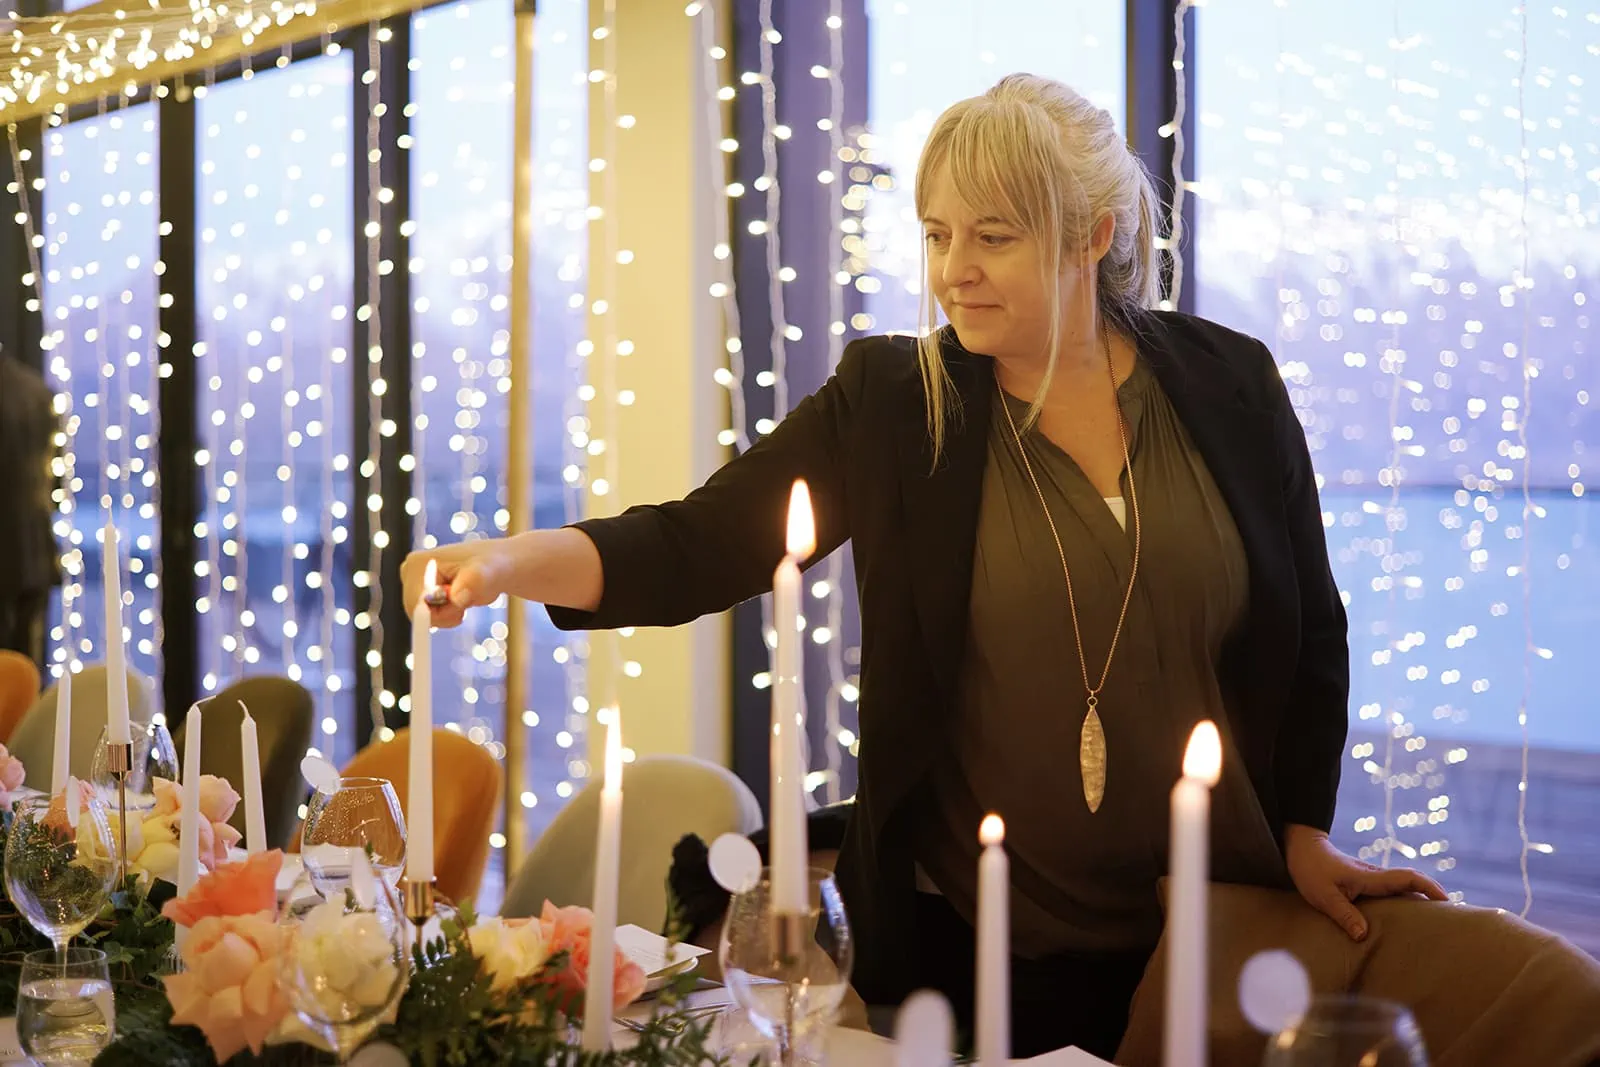 Queenstown New Zealand Elopement Wedding Photographer - A woman lighting candles at a table.